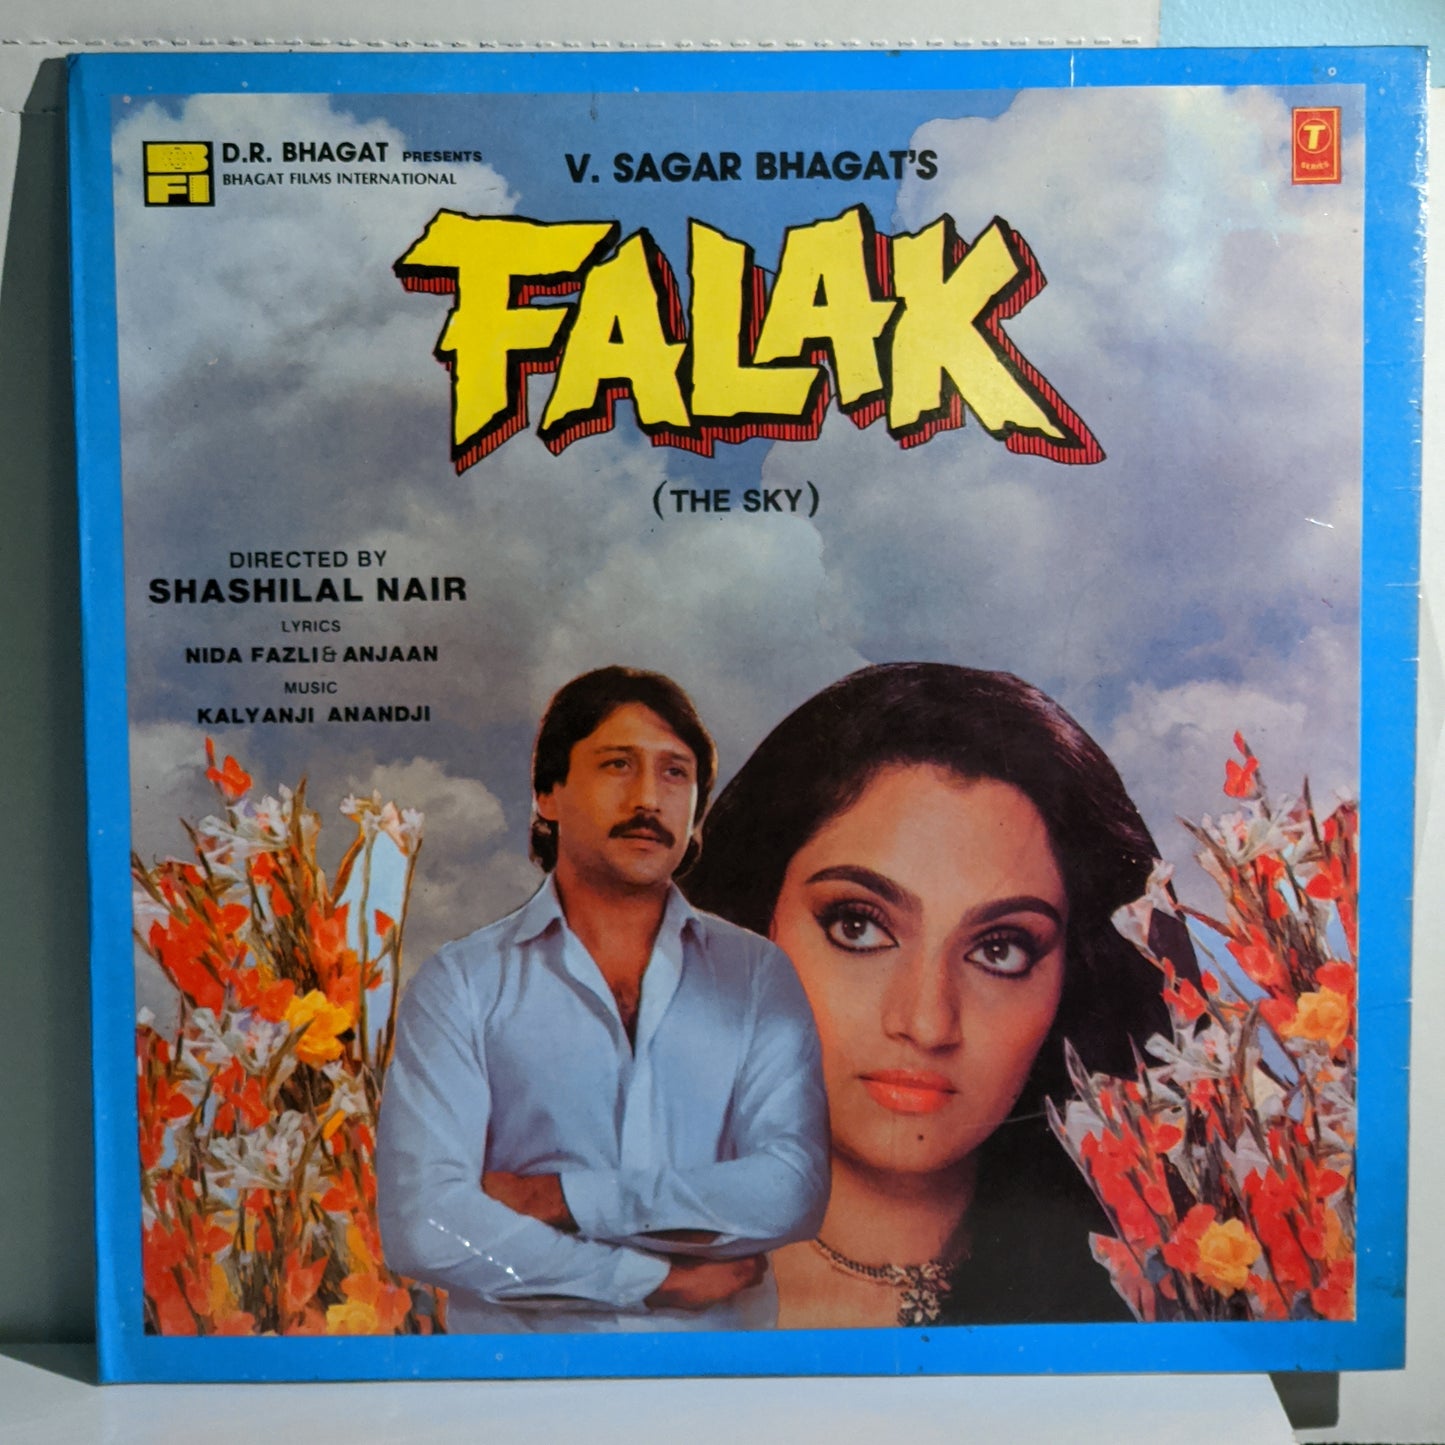 FALAK - Music by  KALYANJI ANADJI  near Mint